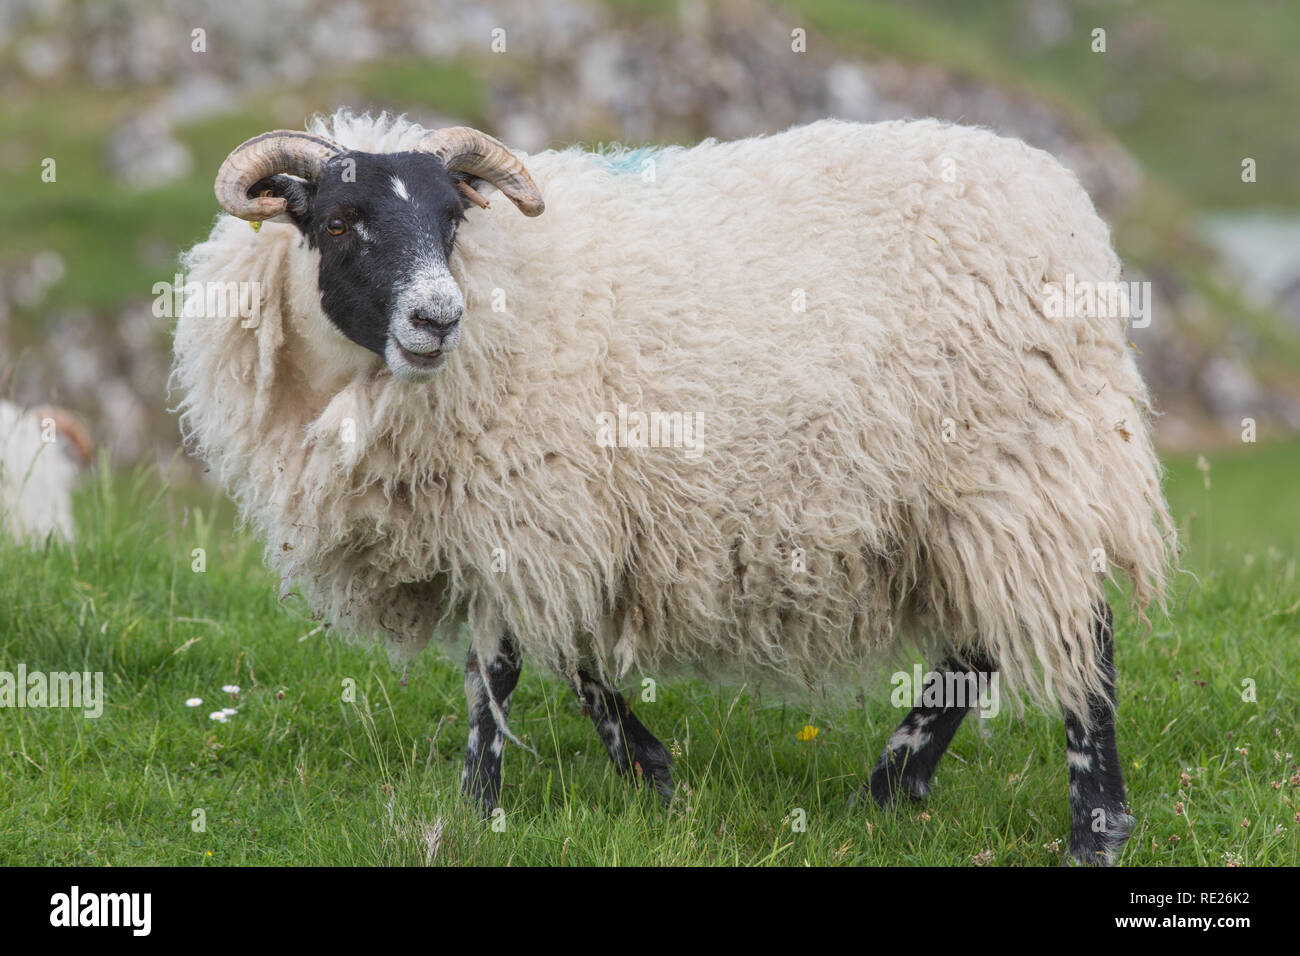 Scottish Blackface Sheep. (Ovis aries). Ewe. Profile. Sideways look. Full fleece. The Island of Mull. The inner Hebrides. West coast of Scotland. Stock Photo